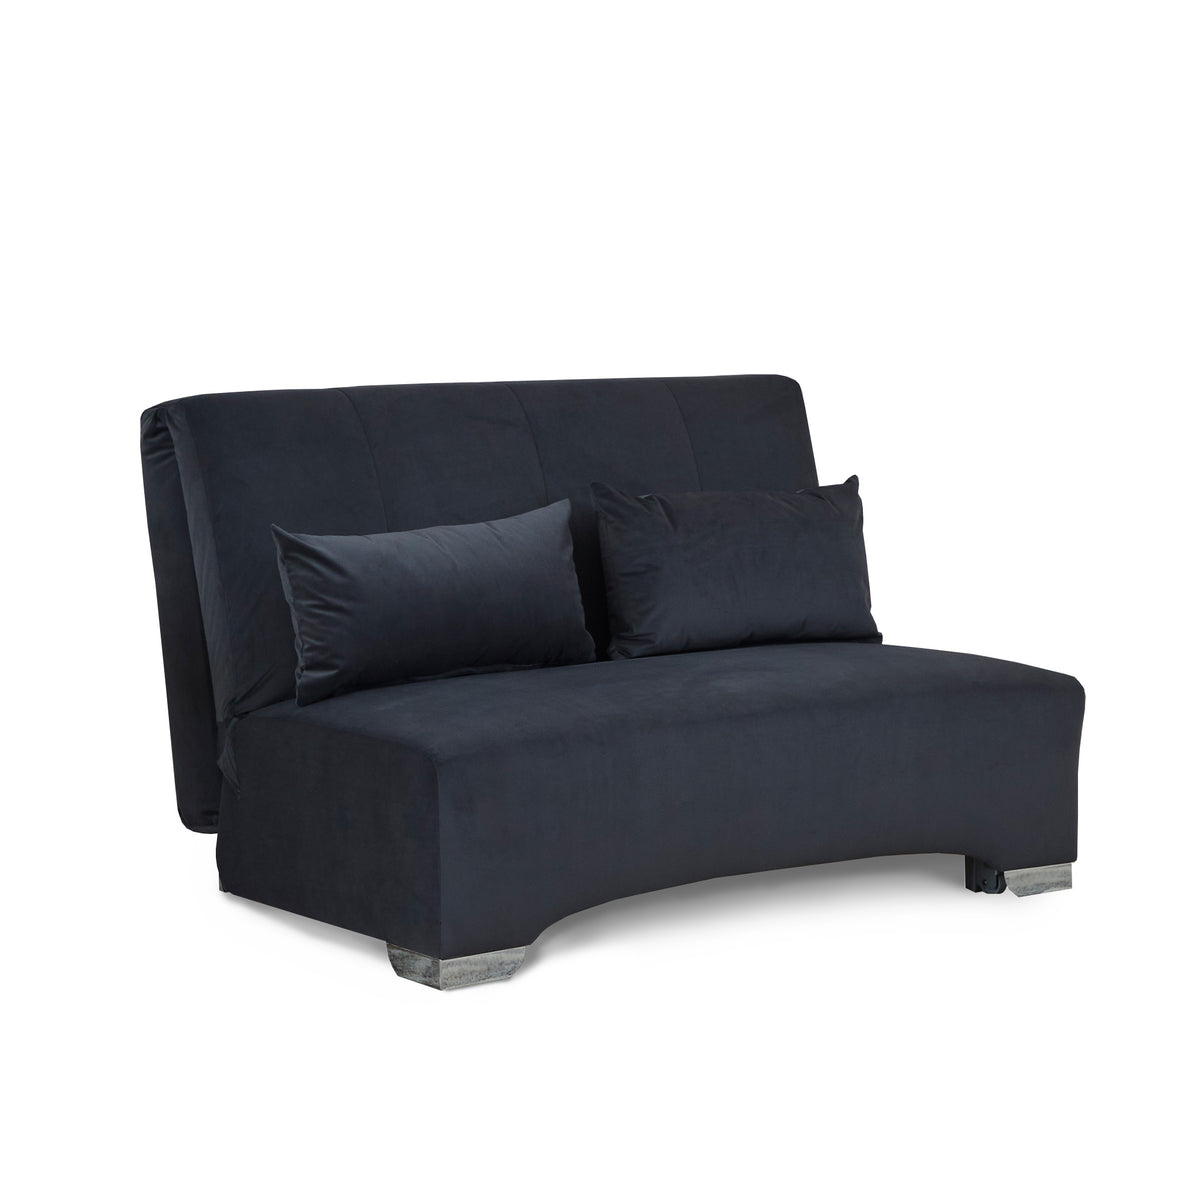 Cortez Grey Velvet Upholstered Pull Out Sofa Bed from Roseland Furniture